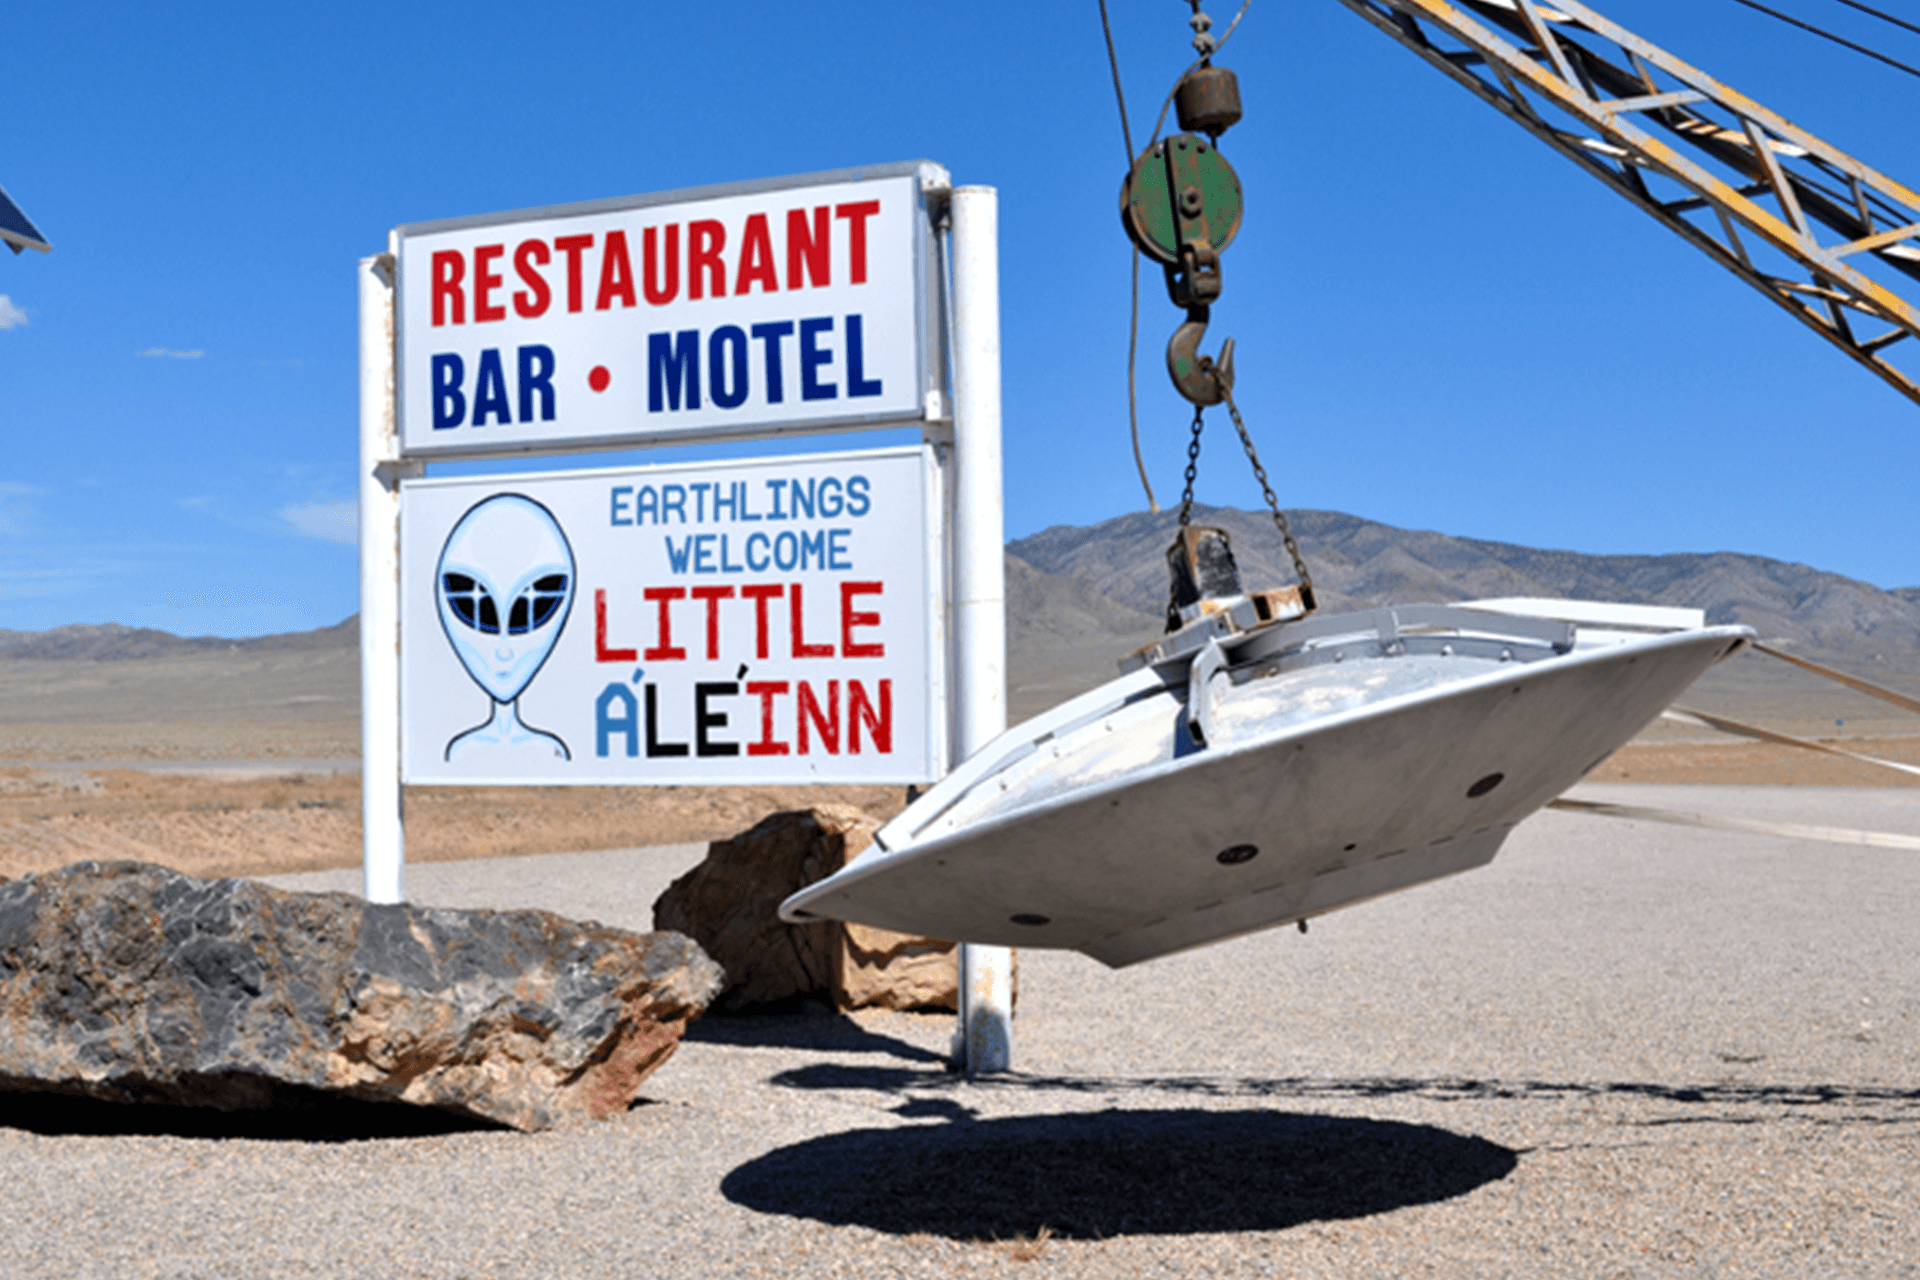 Area 51 Tour from Las Vegas